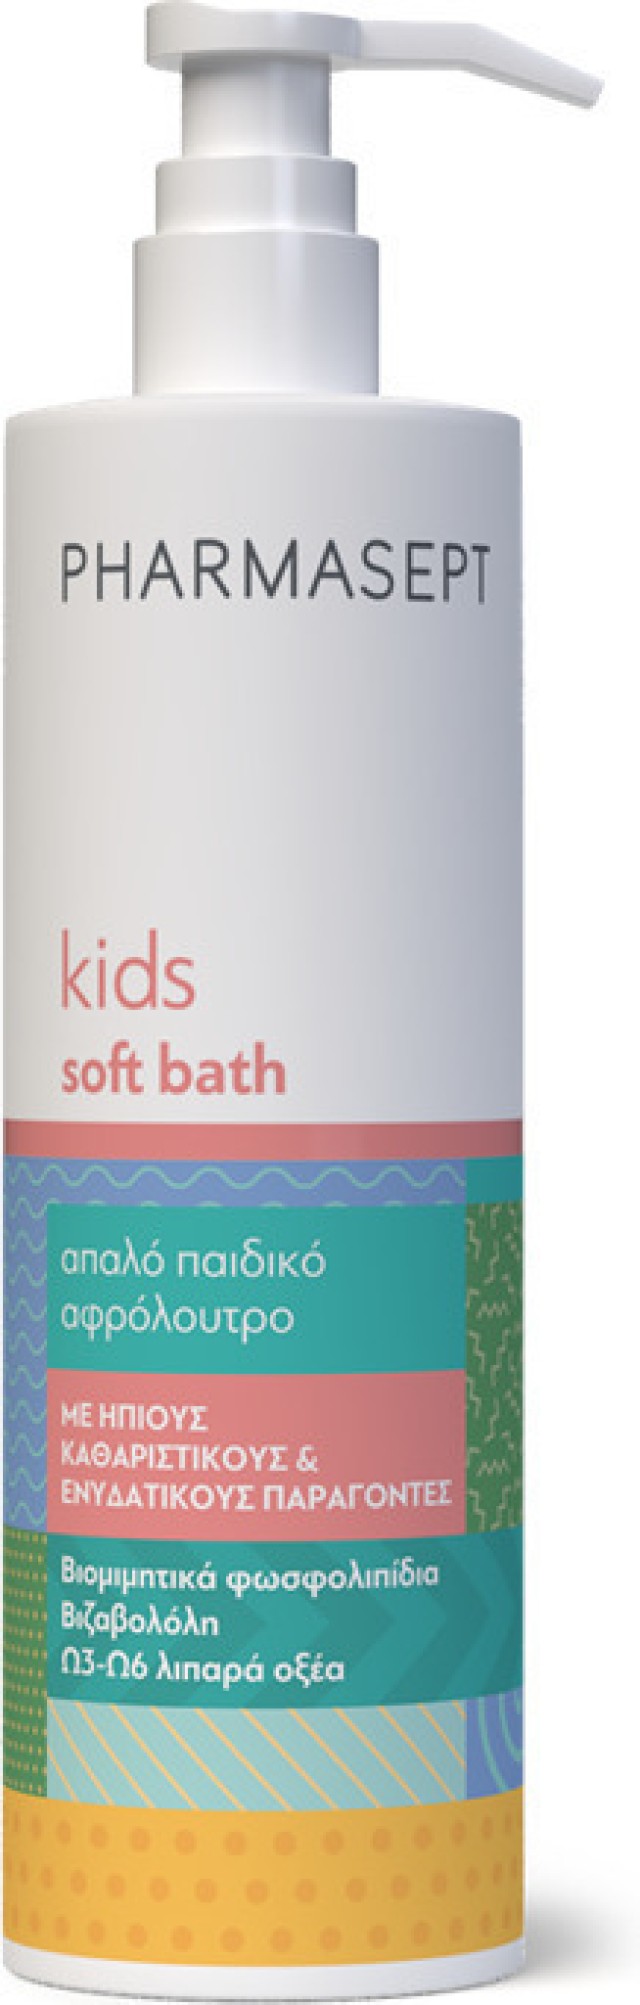 Pharmasept Kids Soft Bath Απαλό Παιδικό Αφρόλουτρο με Ήπιους Καθαριστικούς Παράγοντες 500ml Νέα Συσκευασία